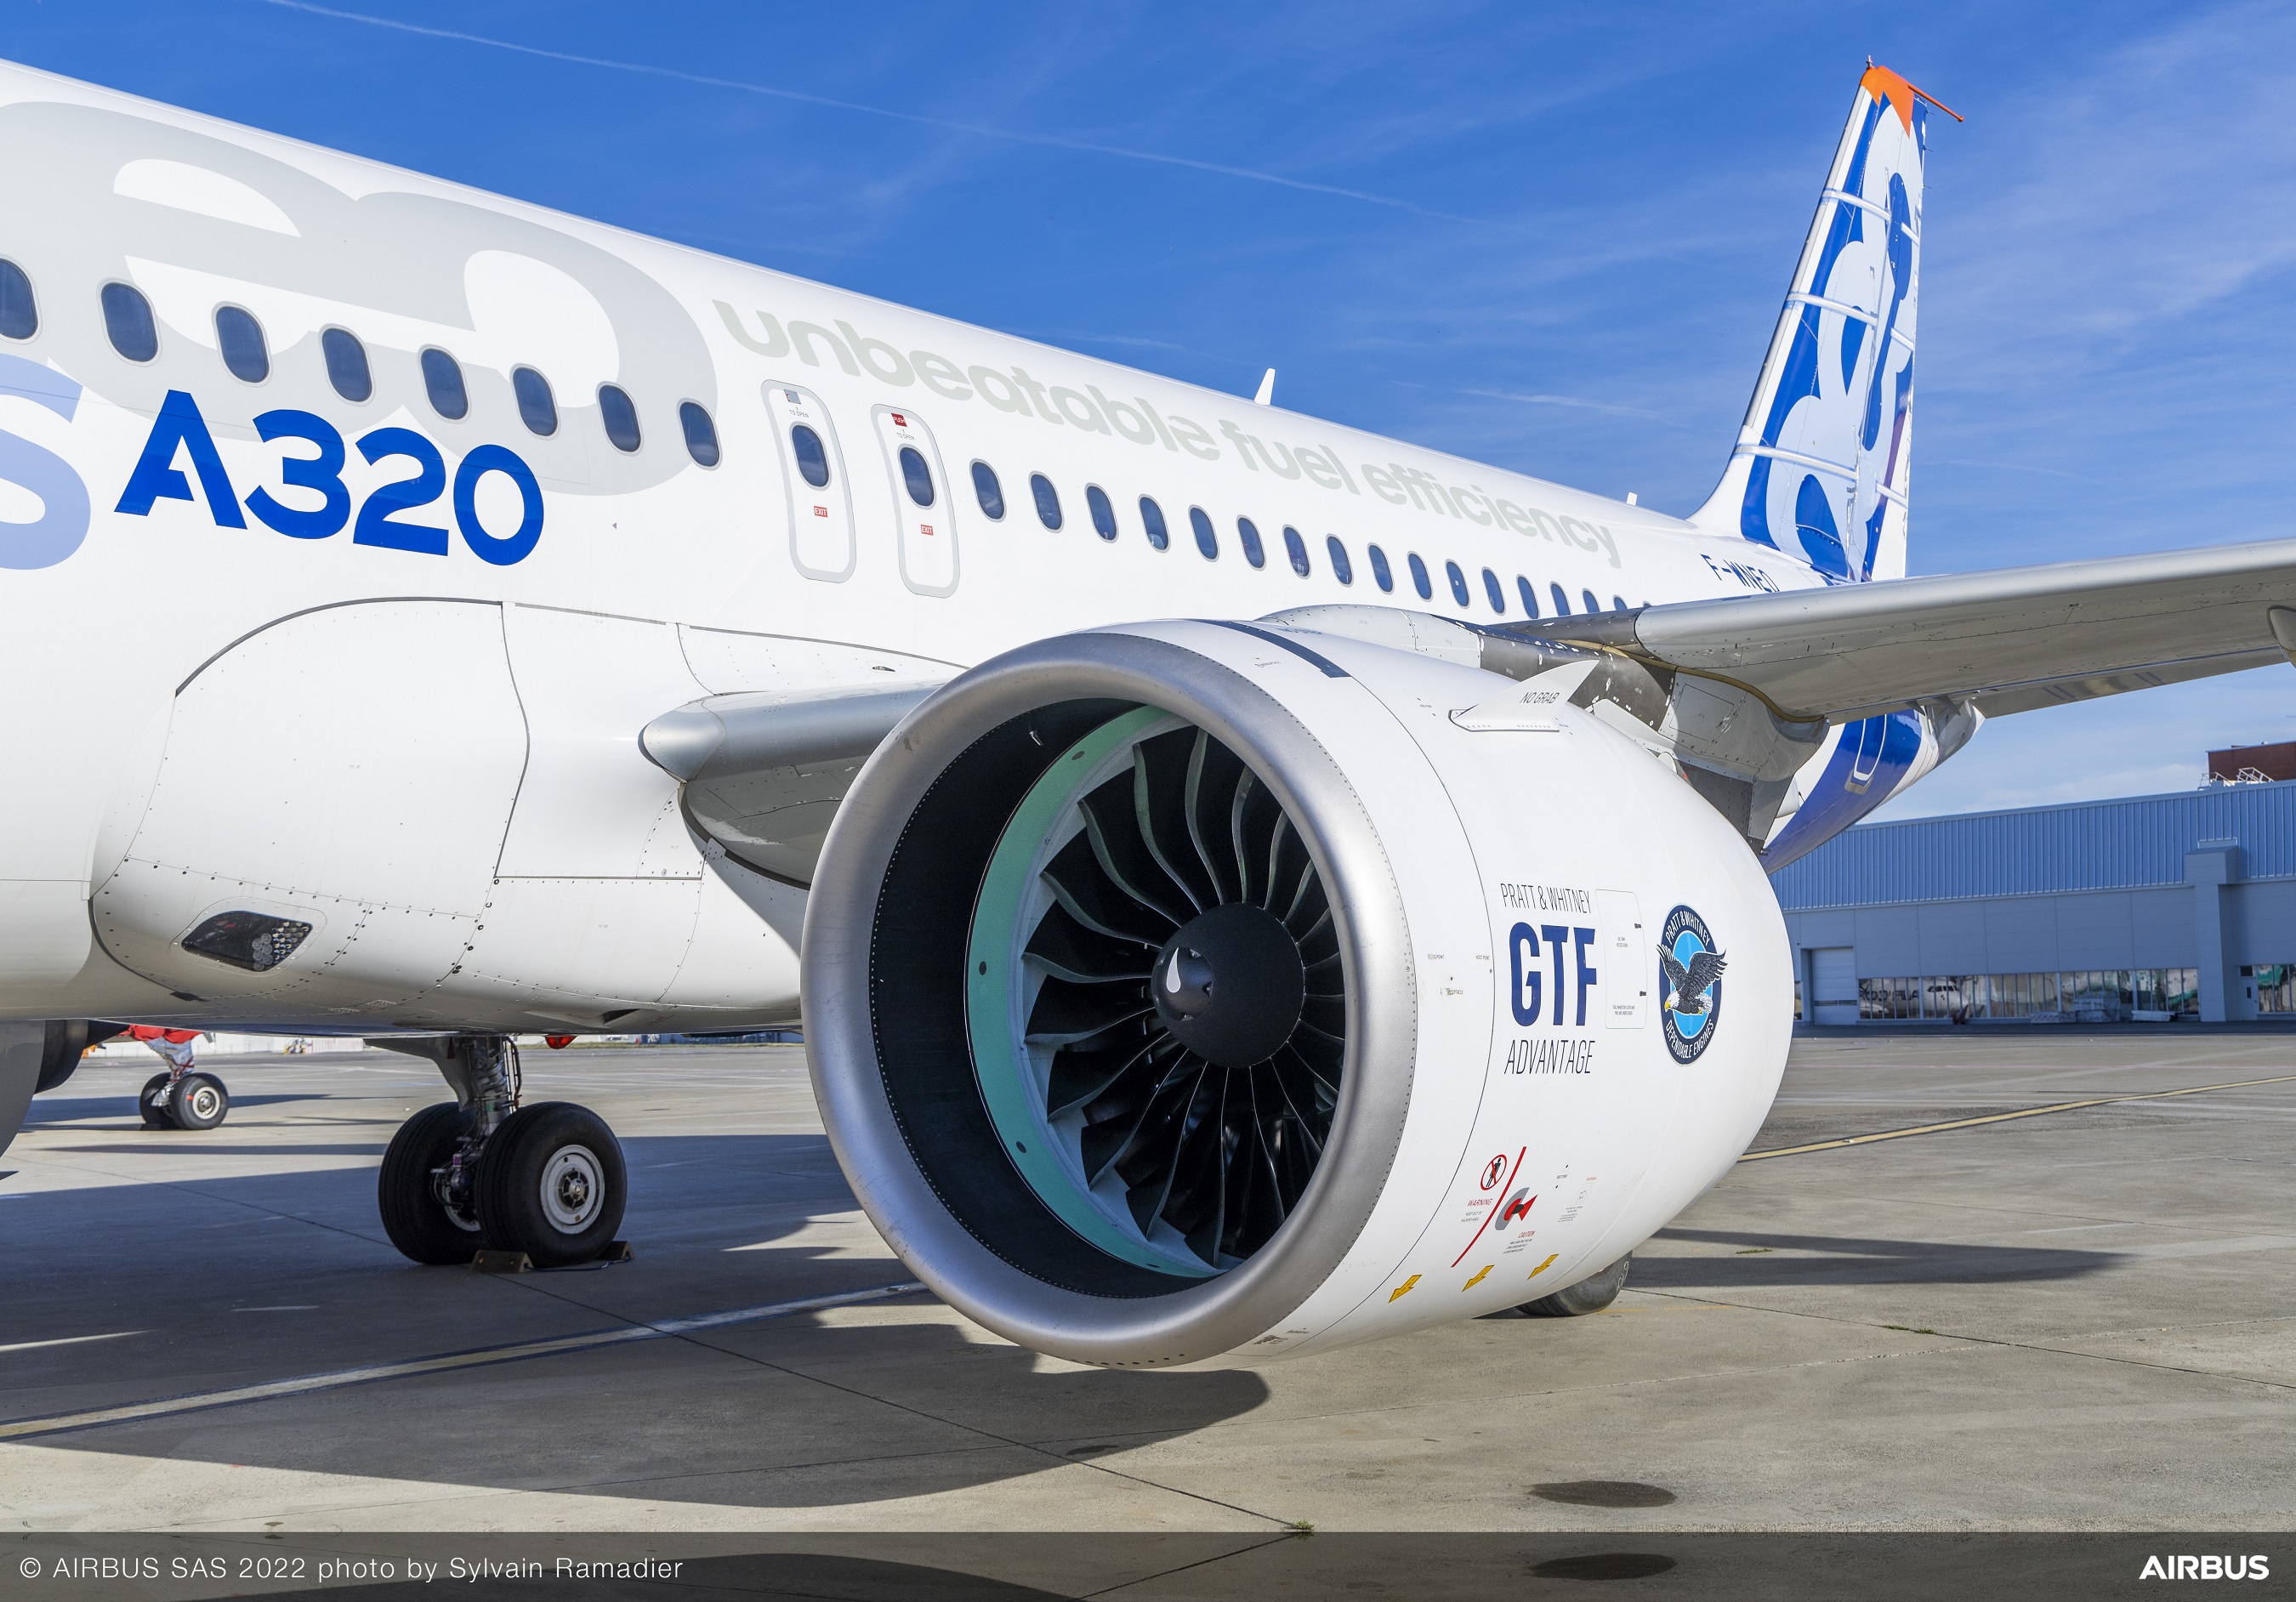 Pratt and Whitney’s GTF Advantage Engine flight testing starts on Airbus’ A320neo